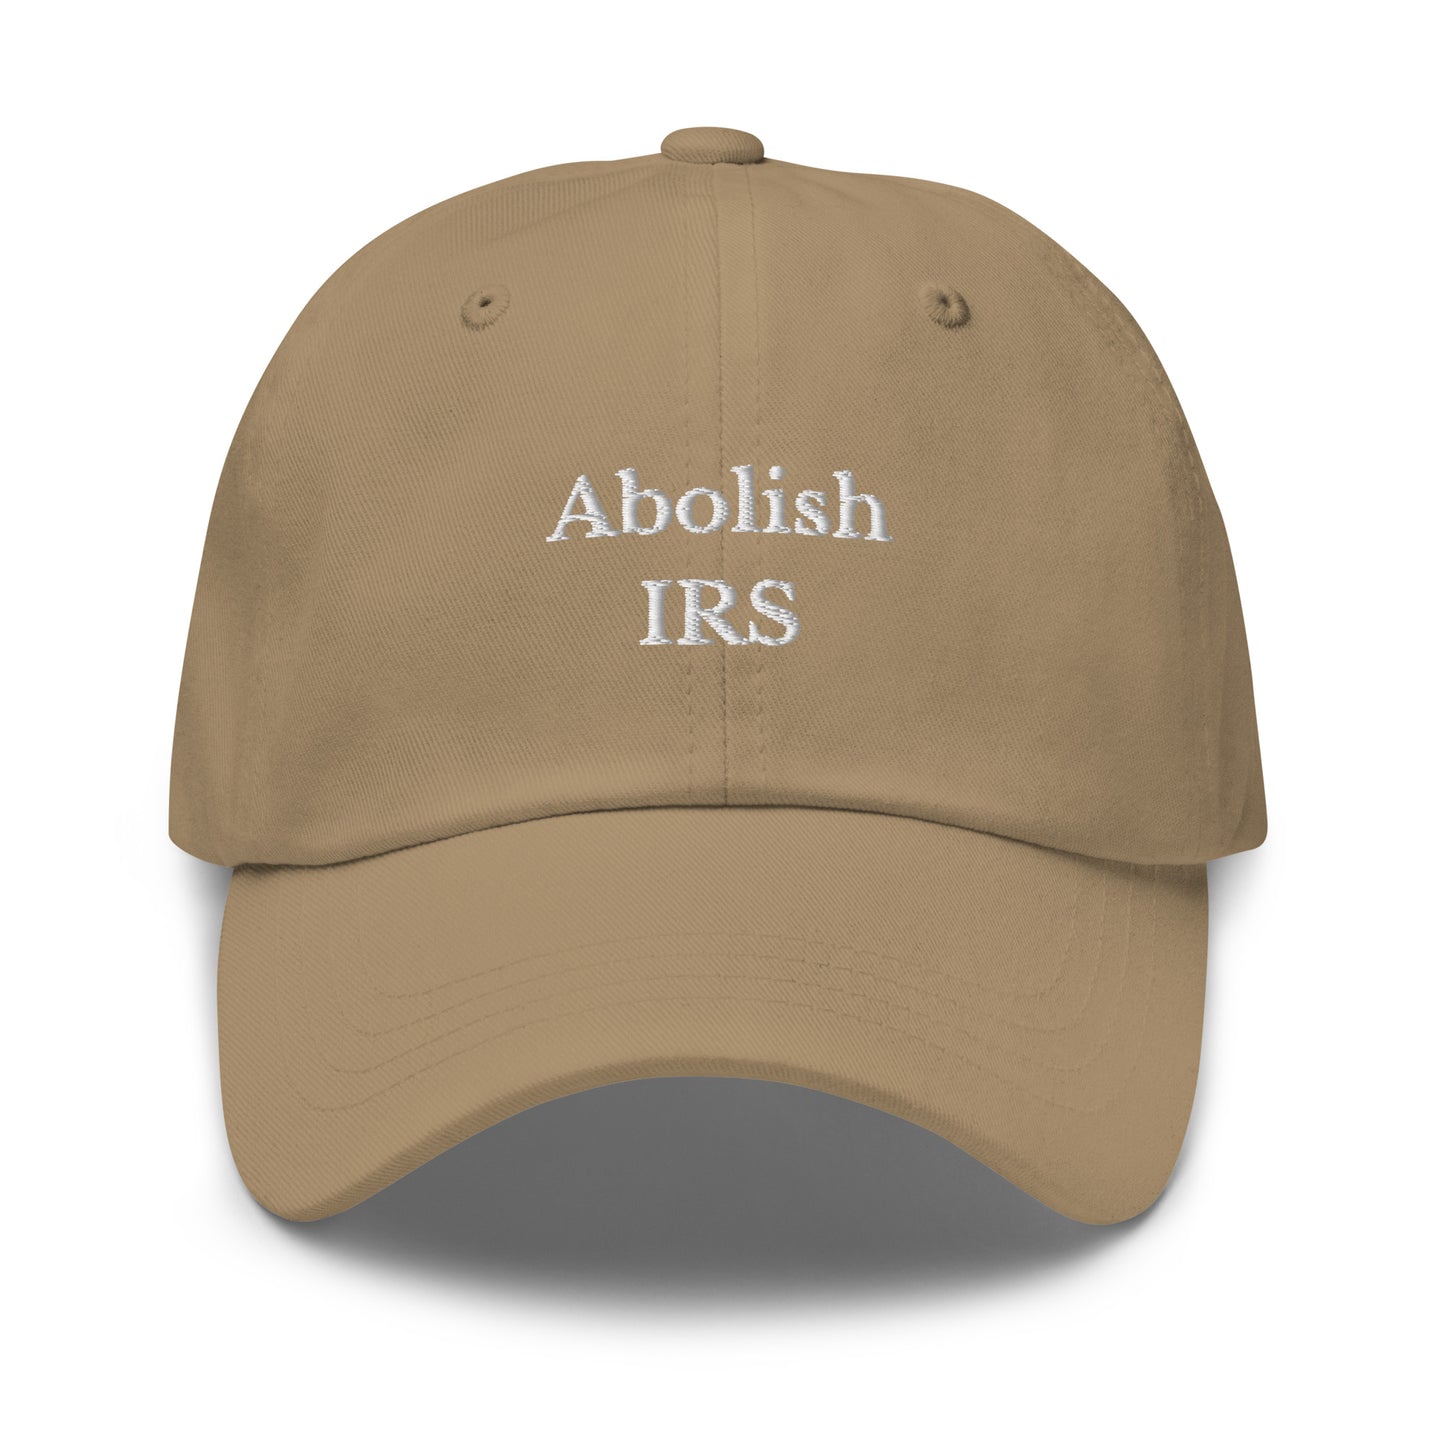 Abolish IRS Cap